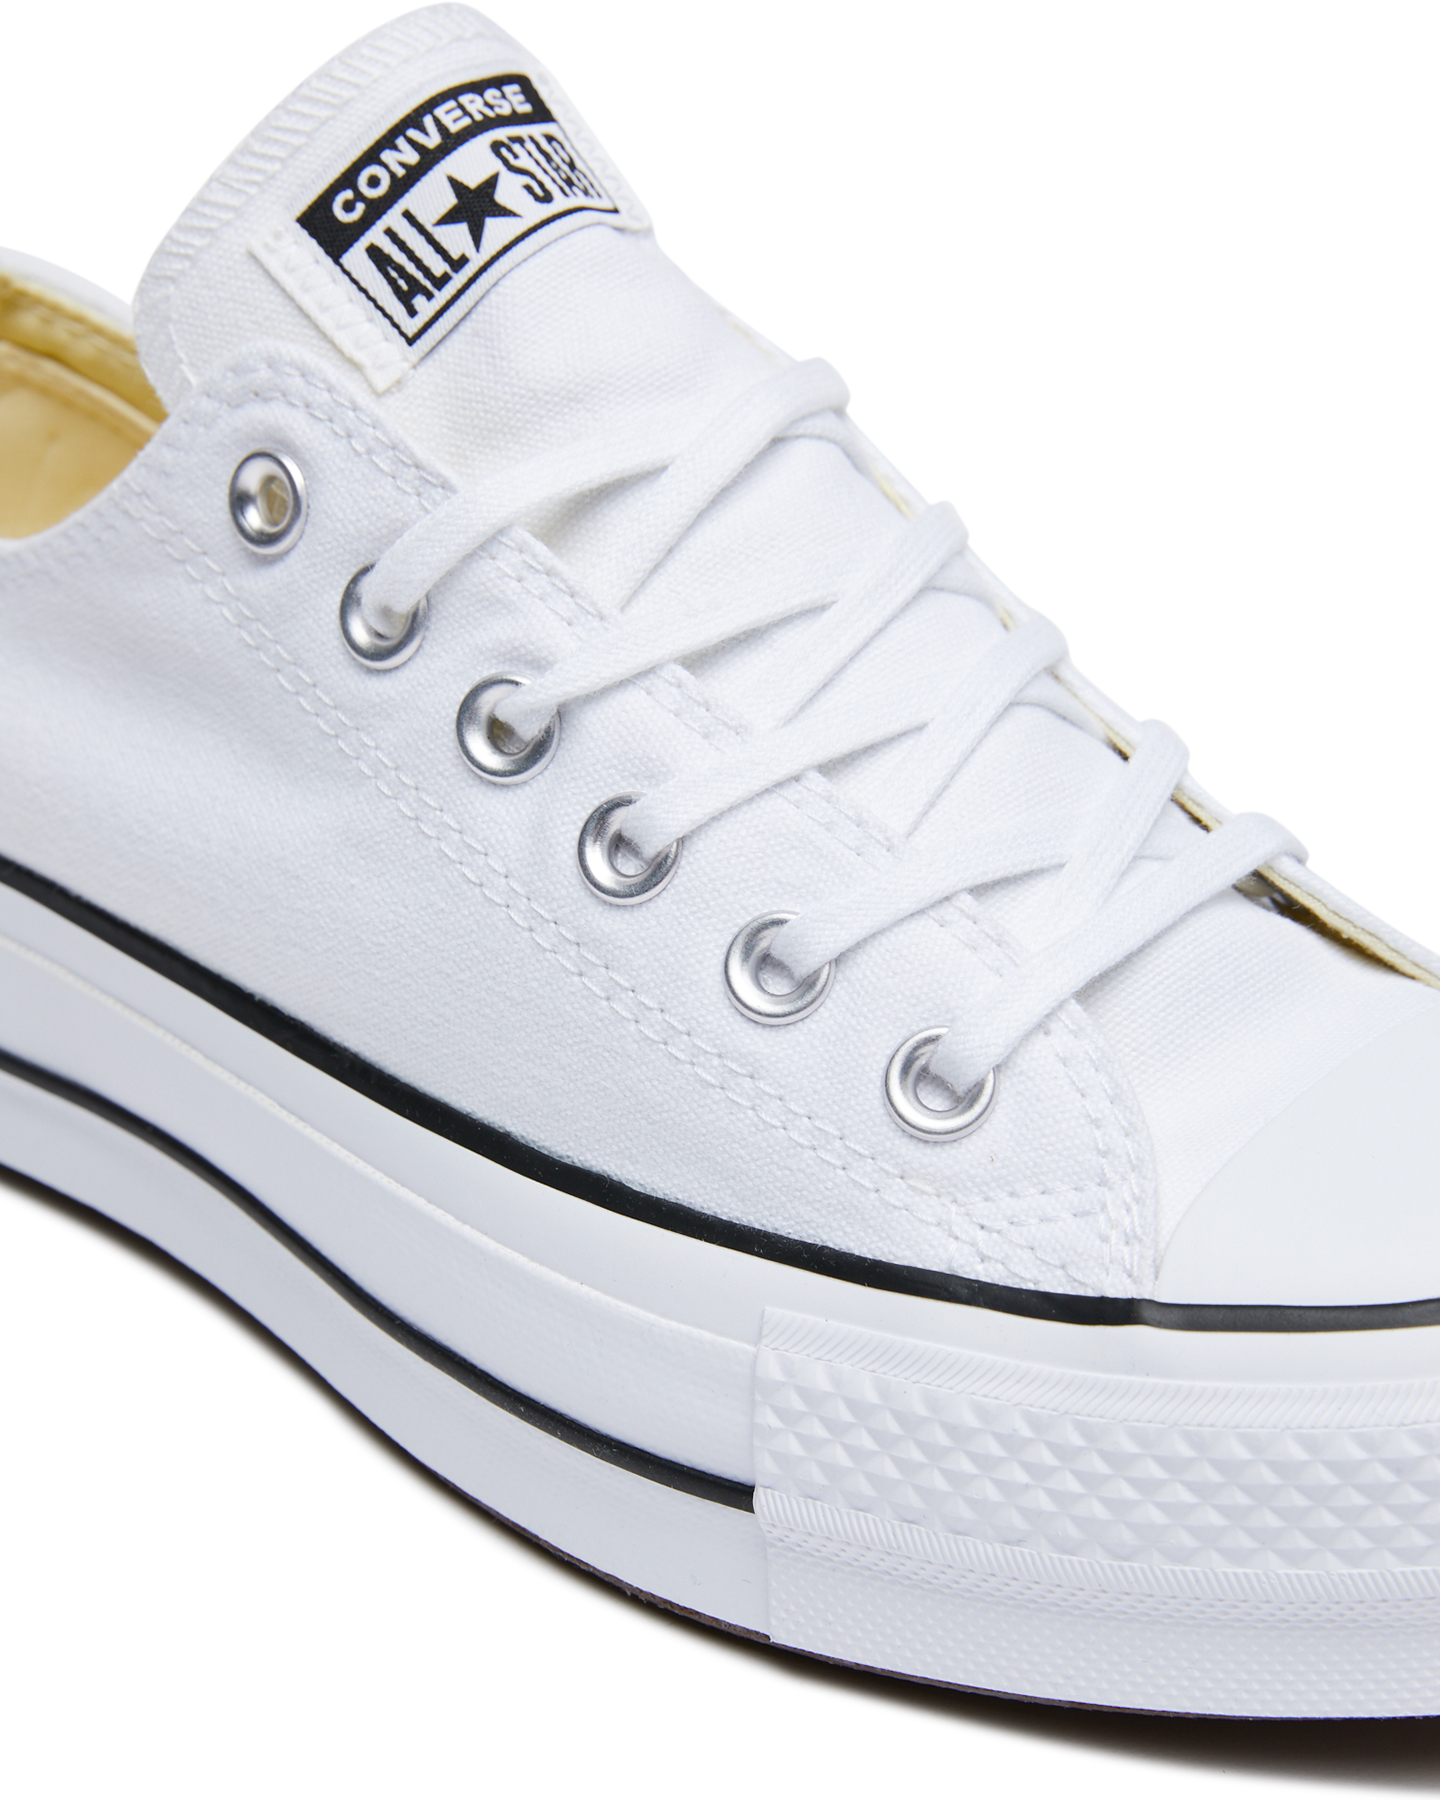 Converse Chuck Taylor All Star Platform Shoe - White | SurfStitch